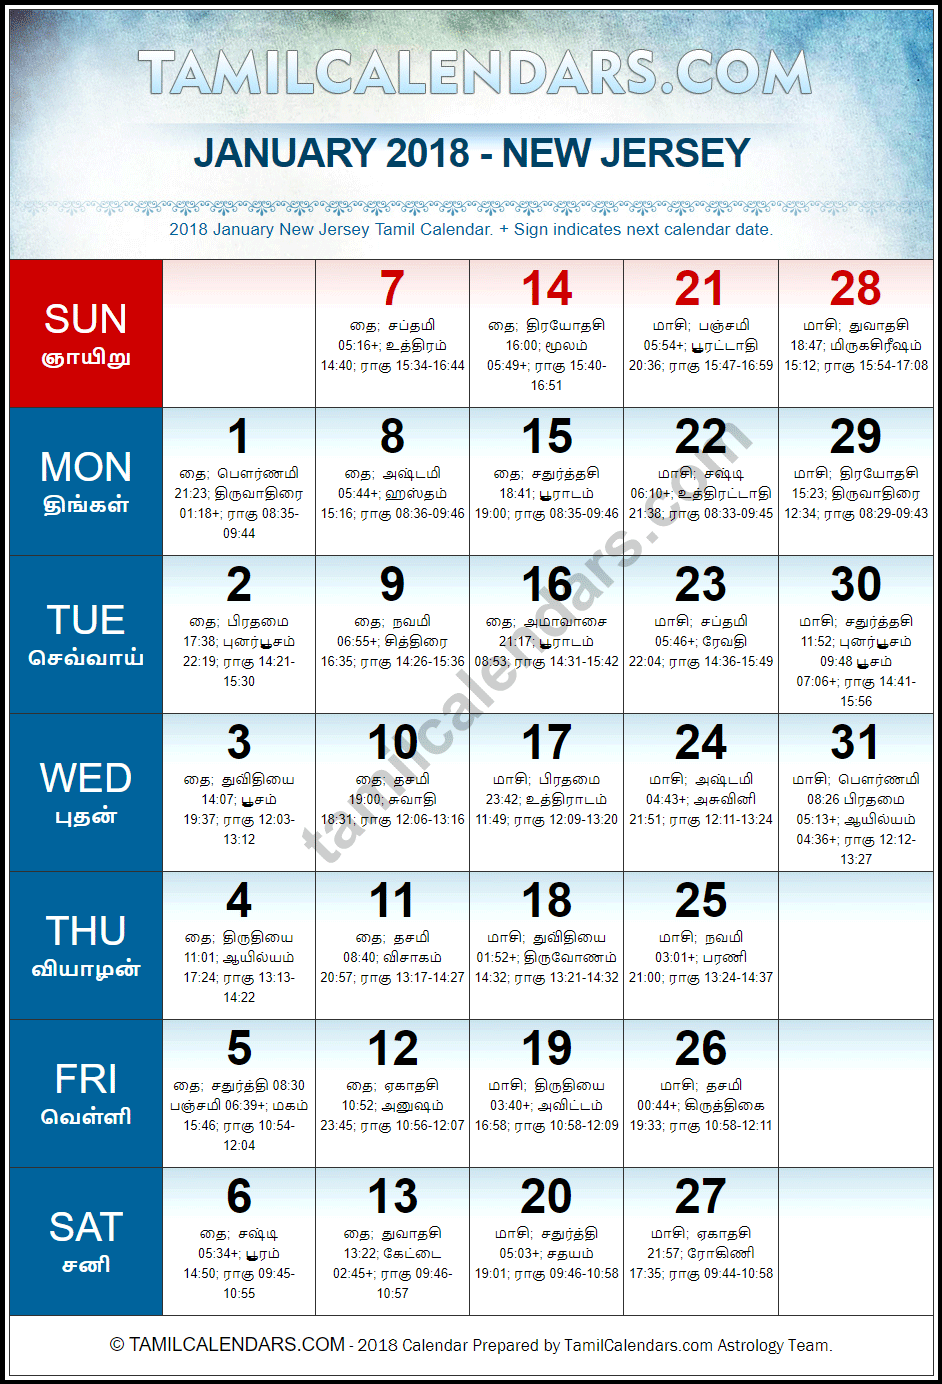 January 2018 Tamil Calendar for New Jersey, USA